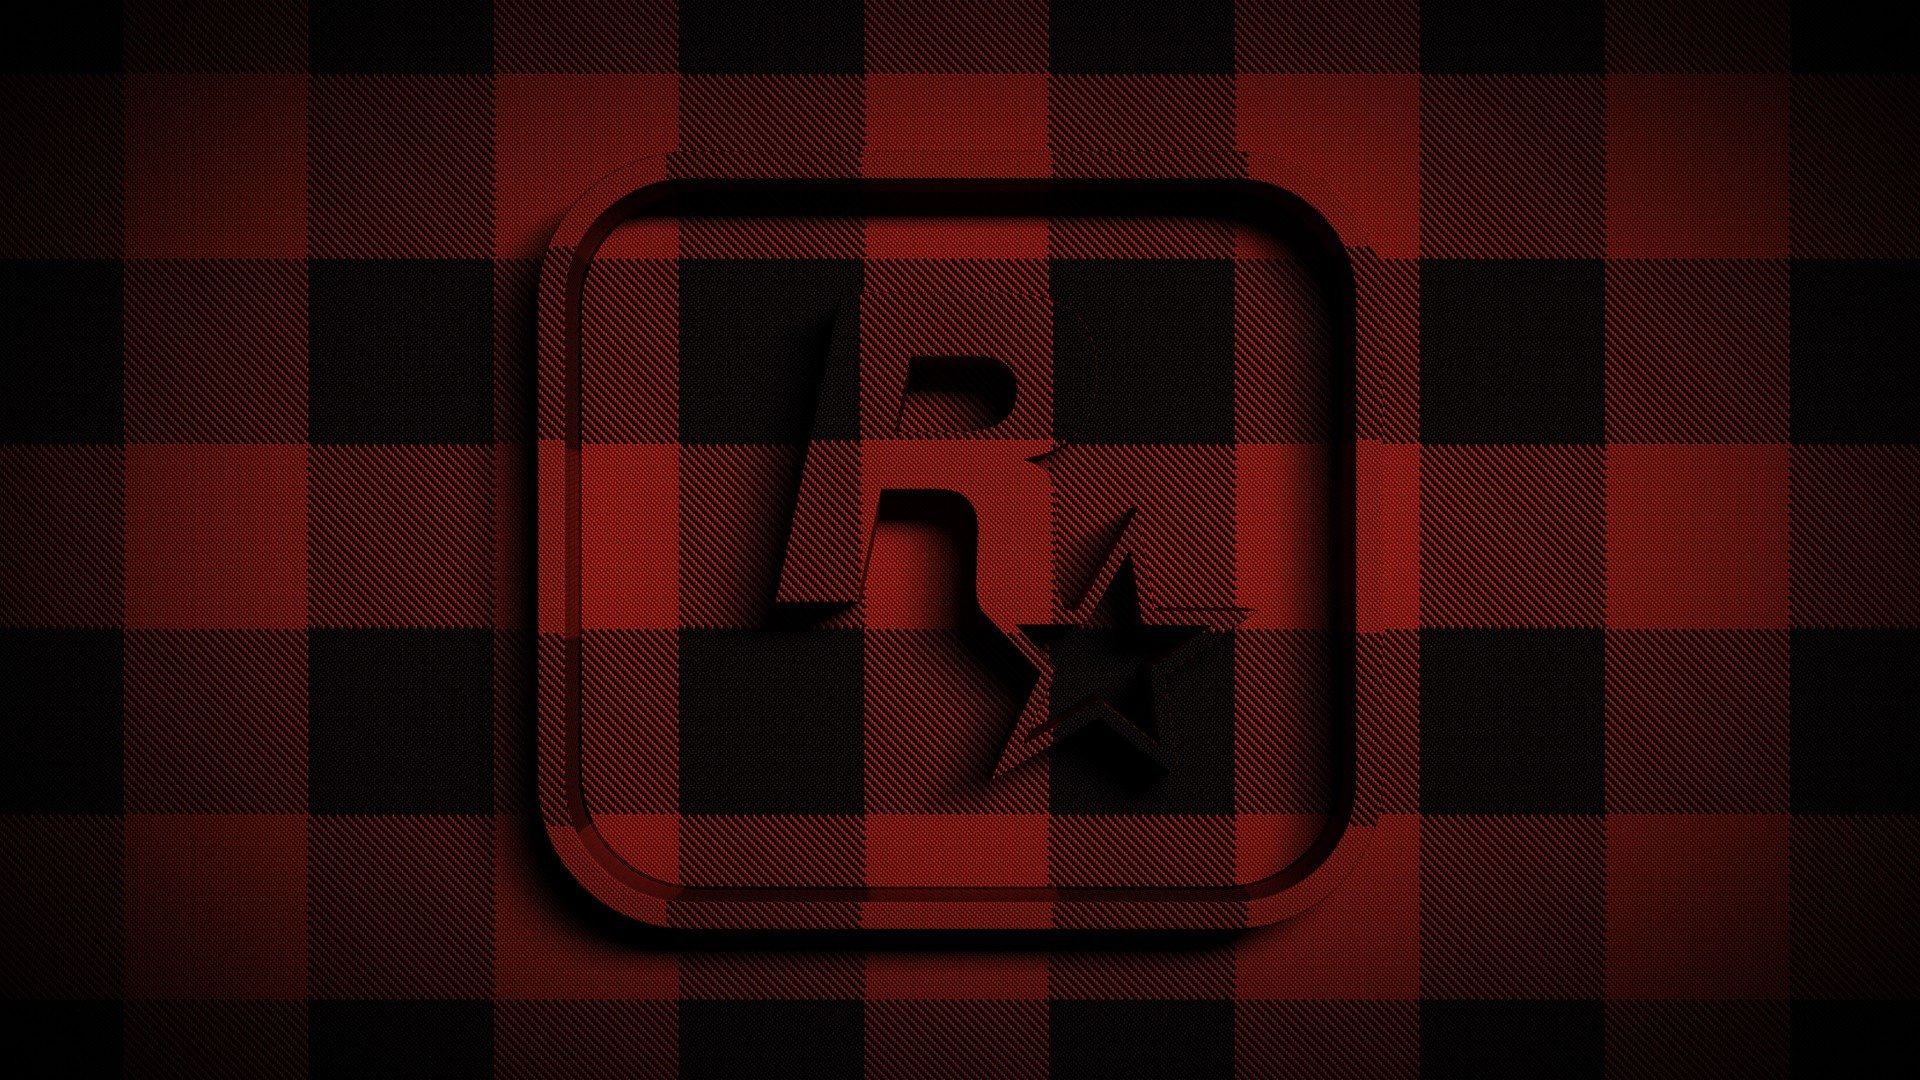 Rockstar games logos tartan wallpaper background